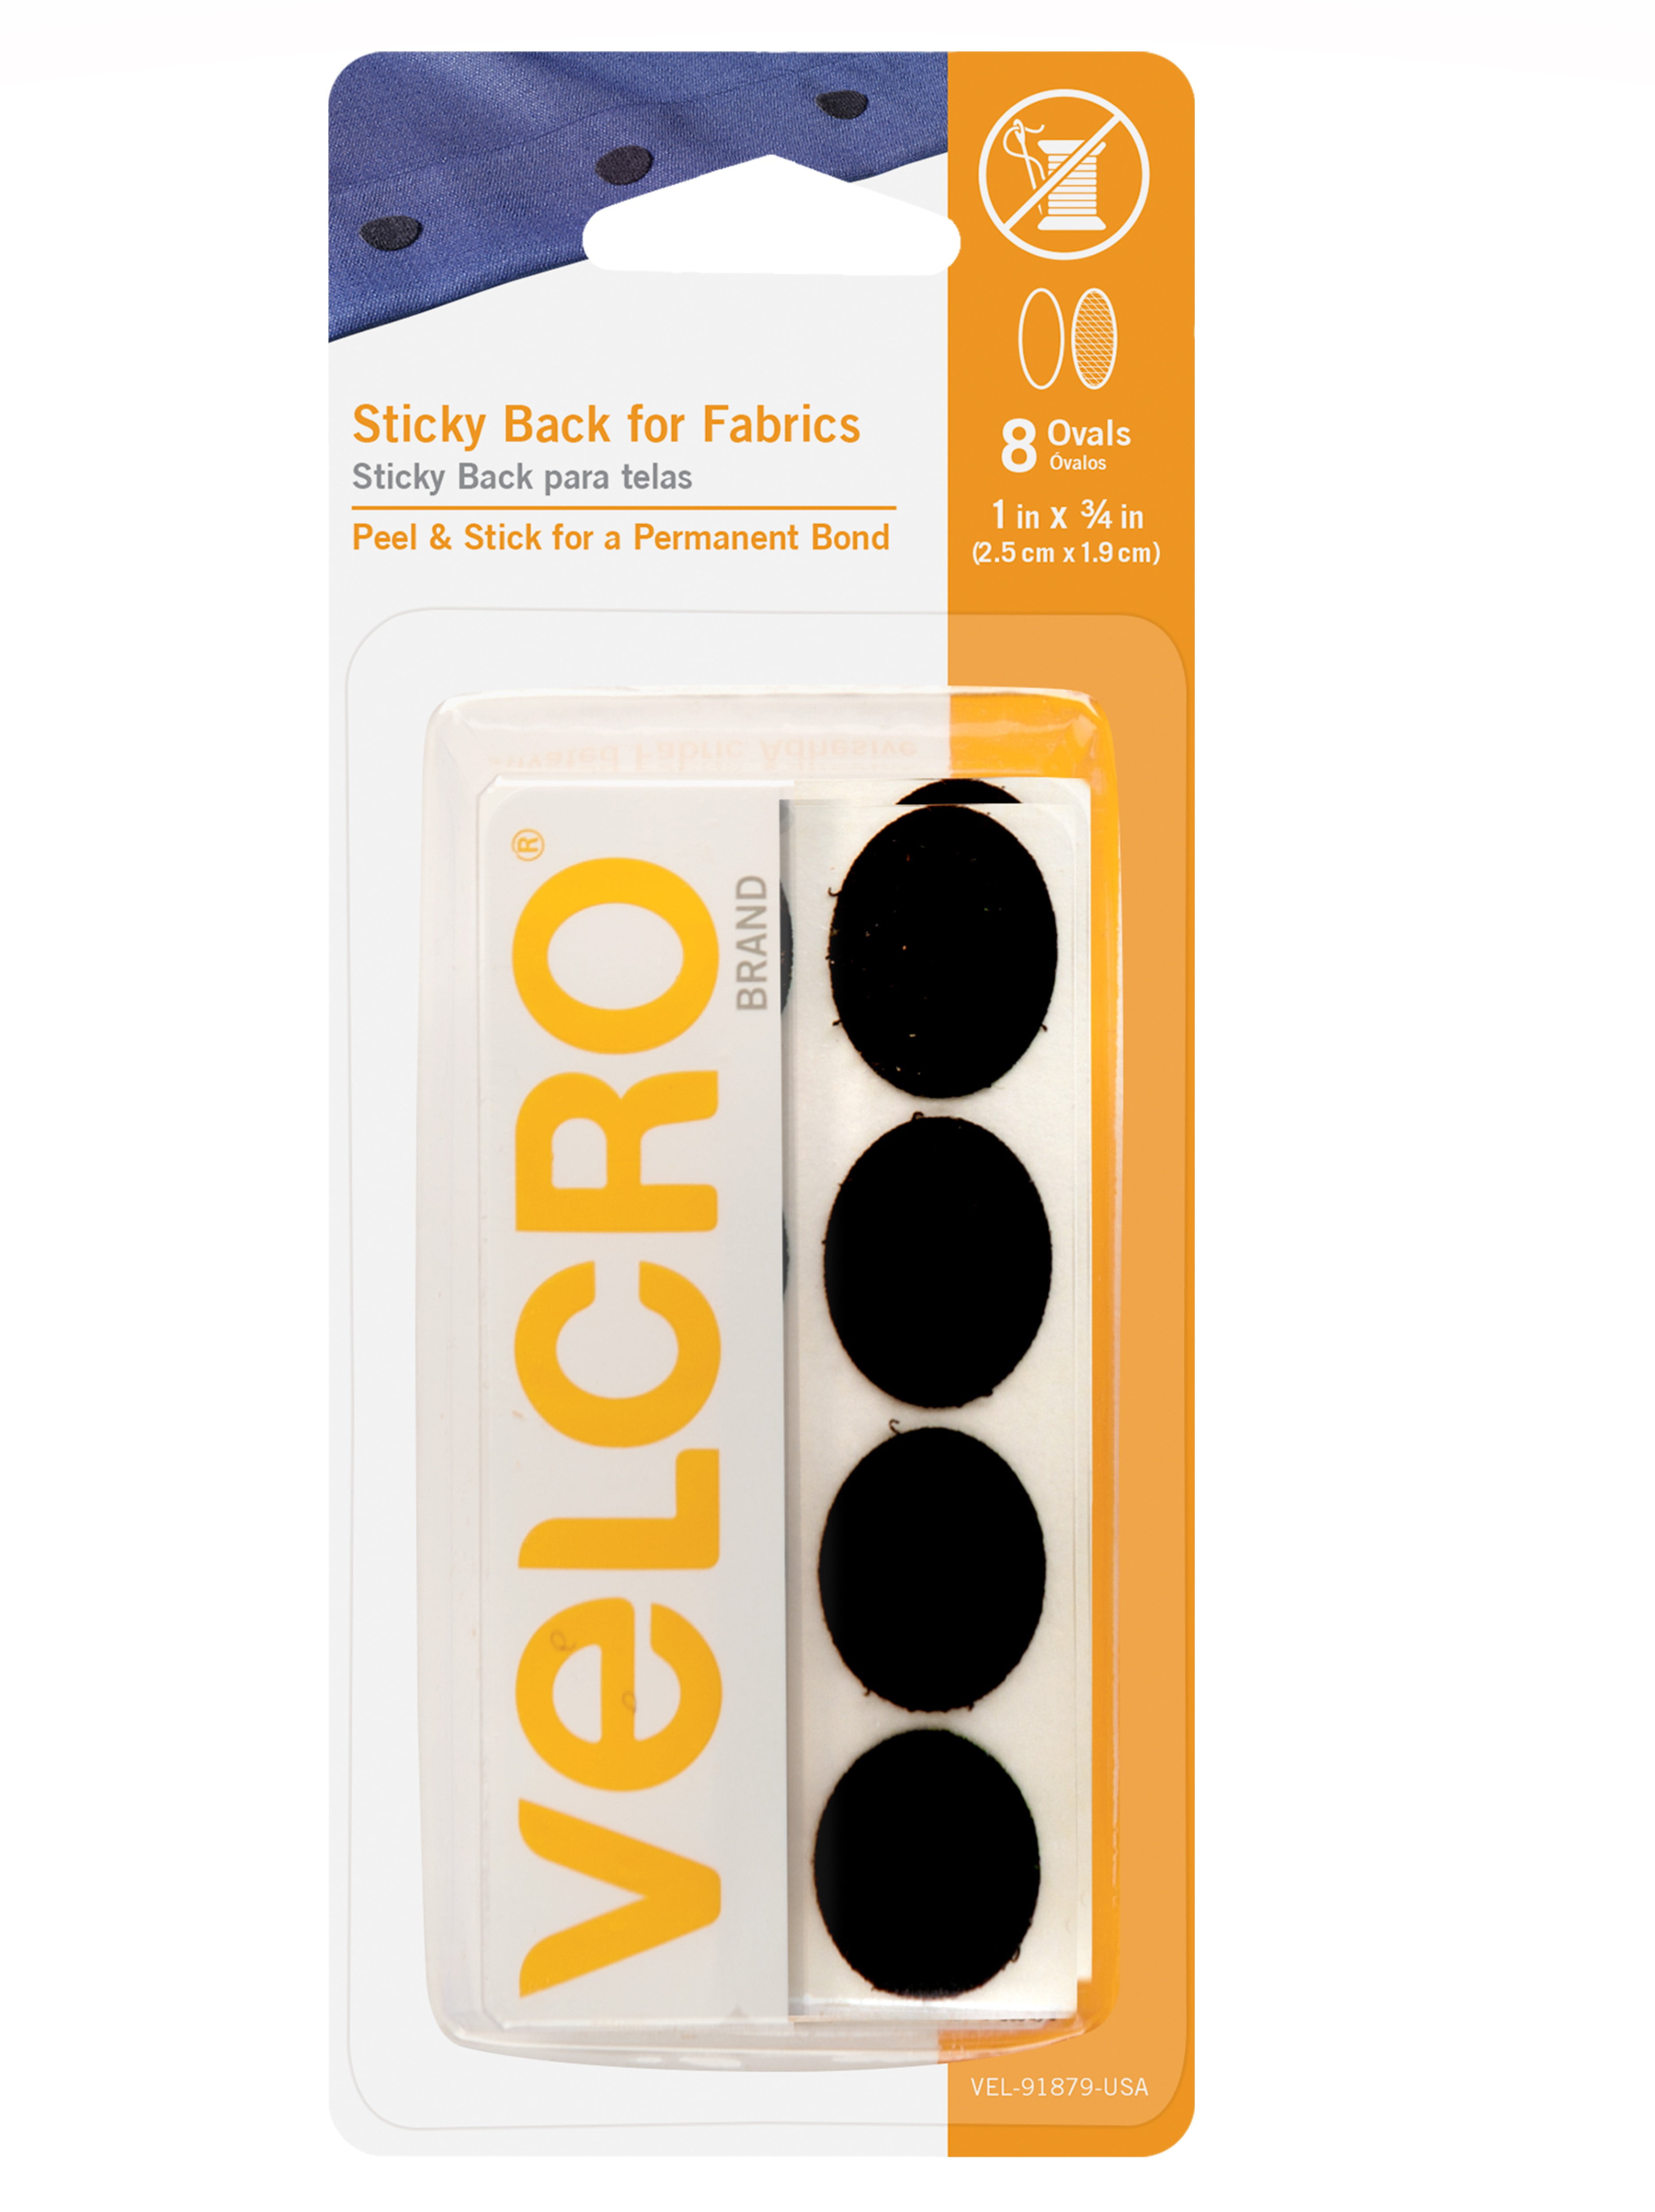 Velcro Brand - Black Sew on Hook and Loop (1 inch, 5 yards)